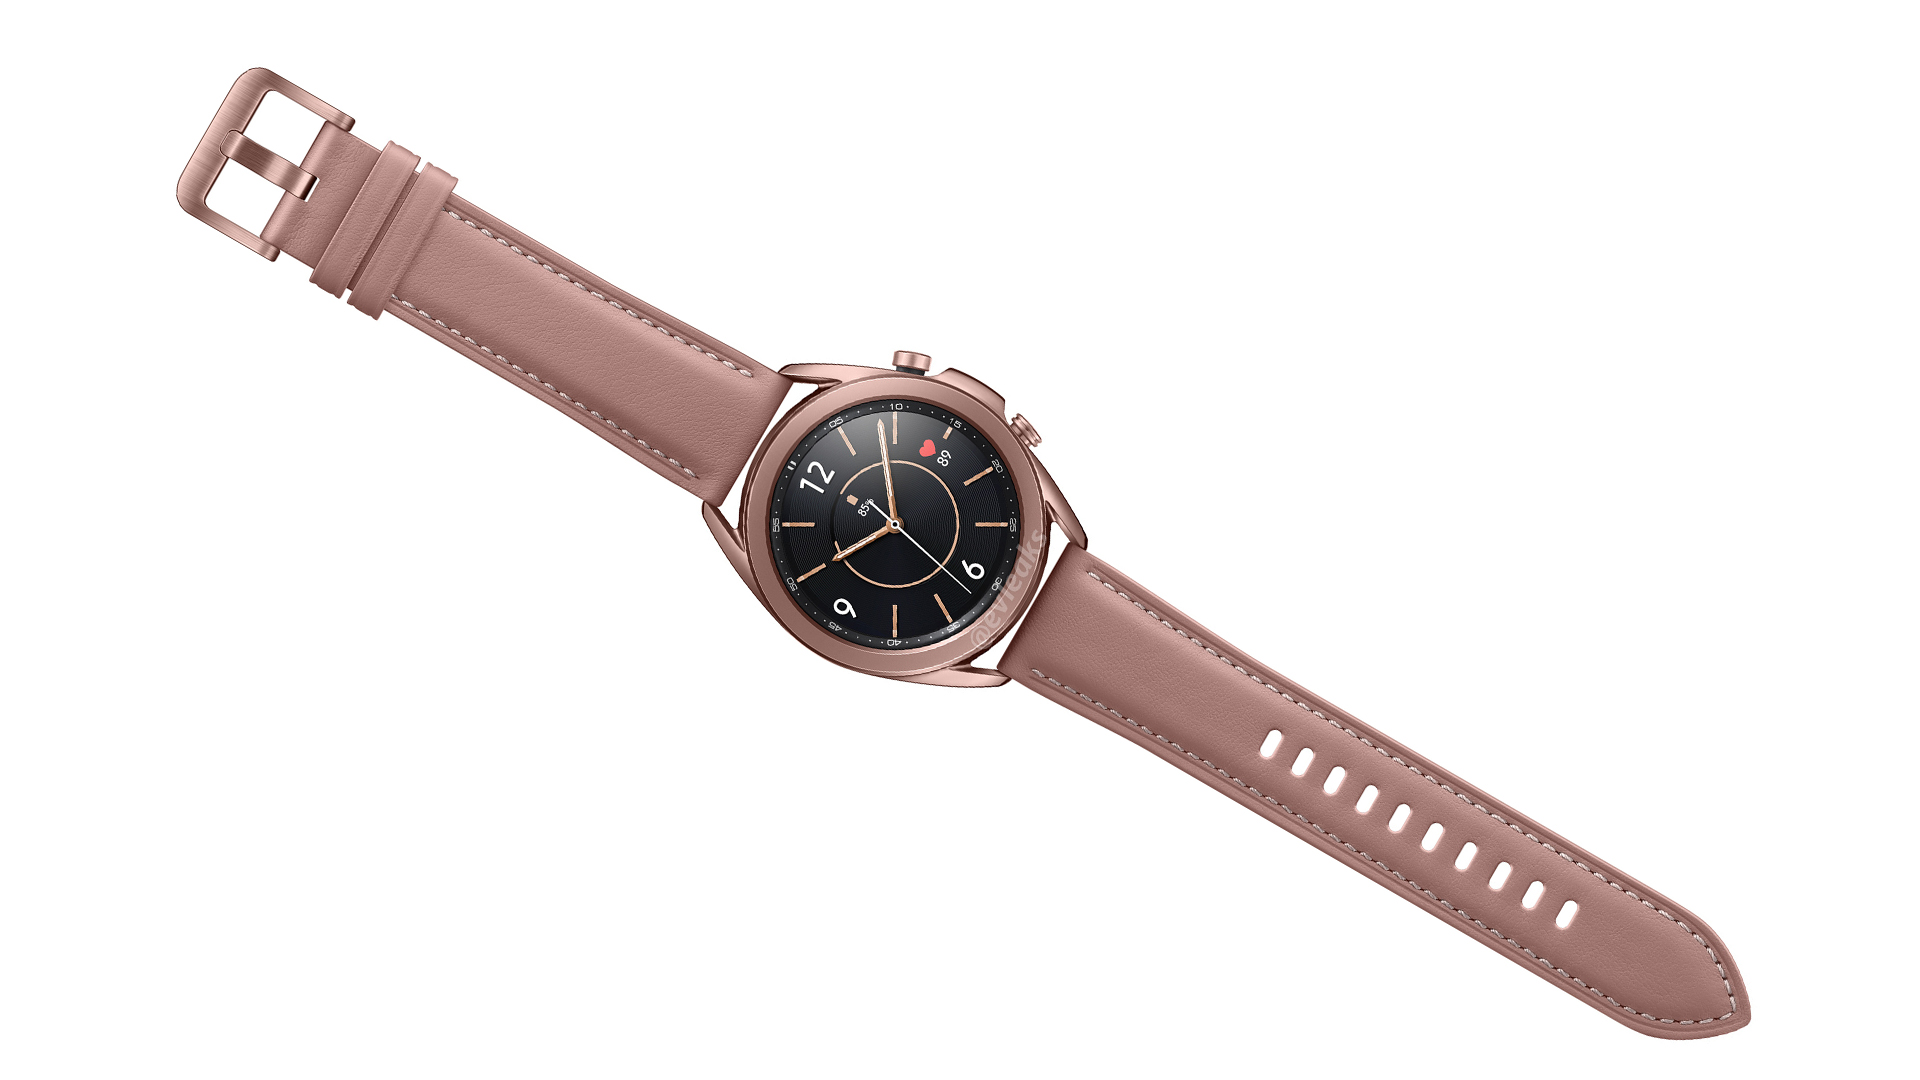 Samsung Galaxy Watch 3 Bronze Leaked Image